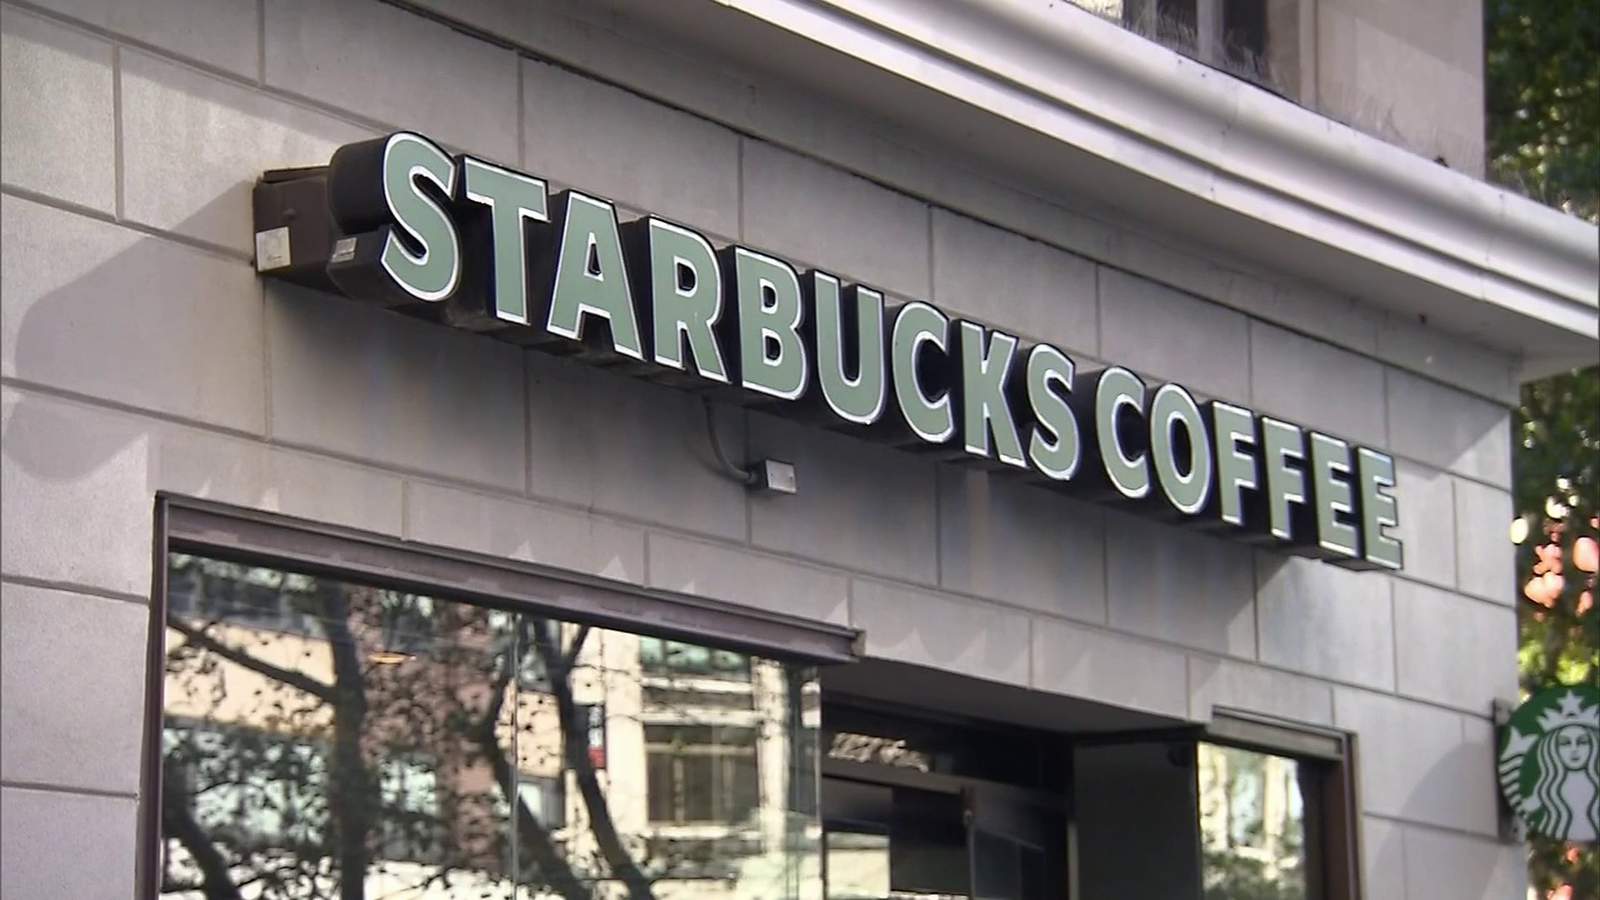 VIDEO: One-hour freebie at Starbucks in Salem